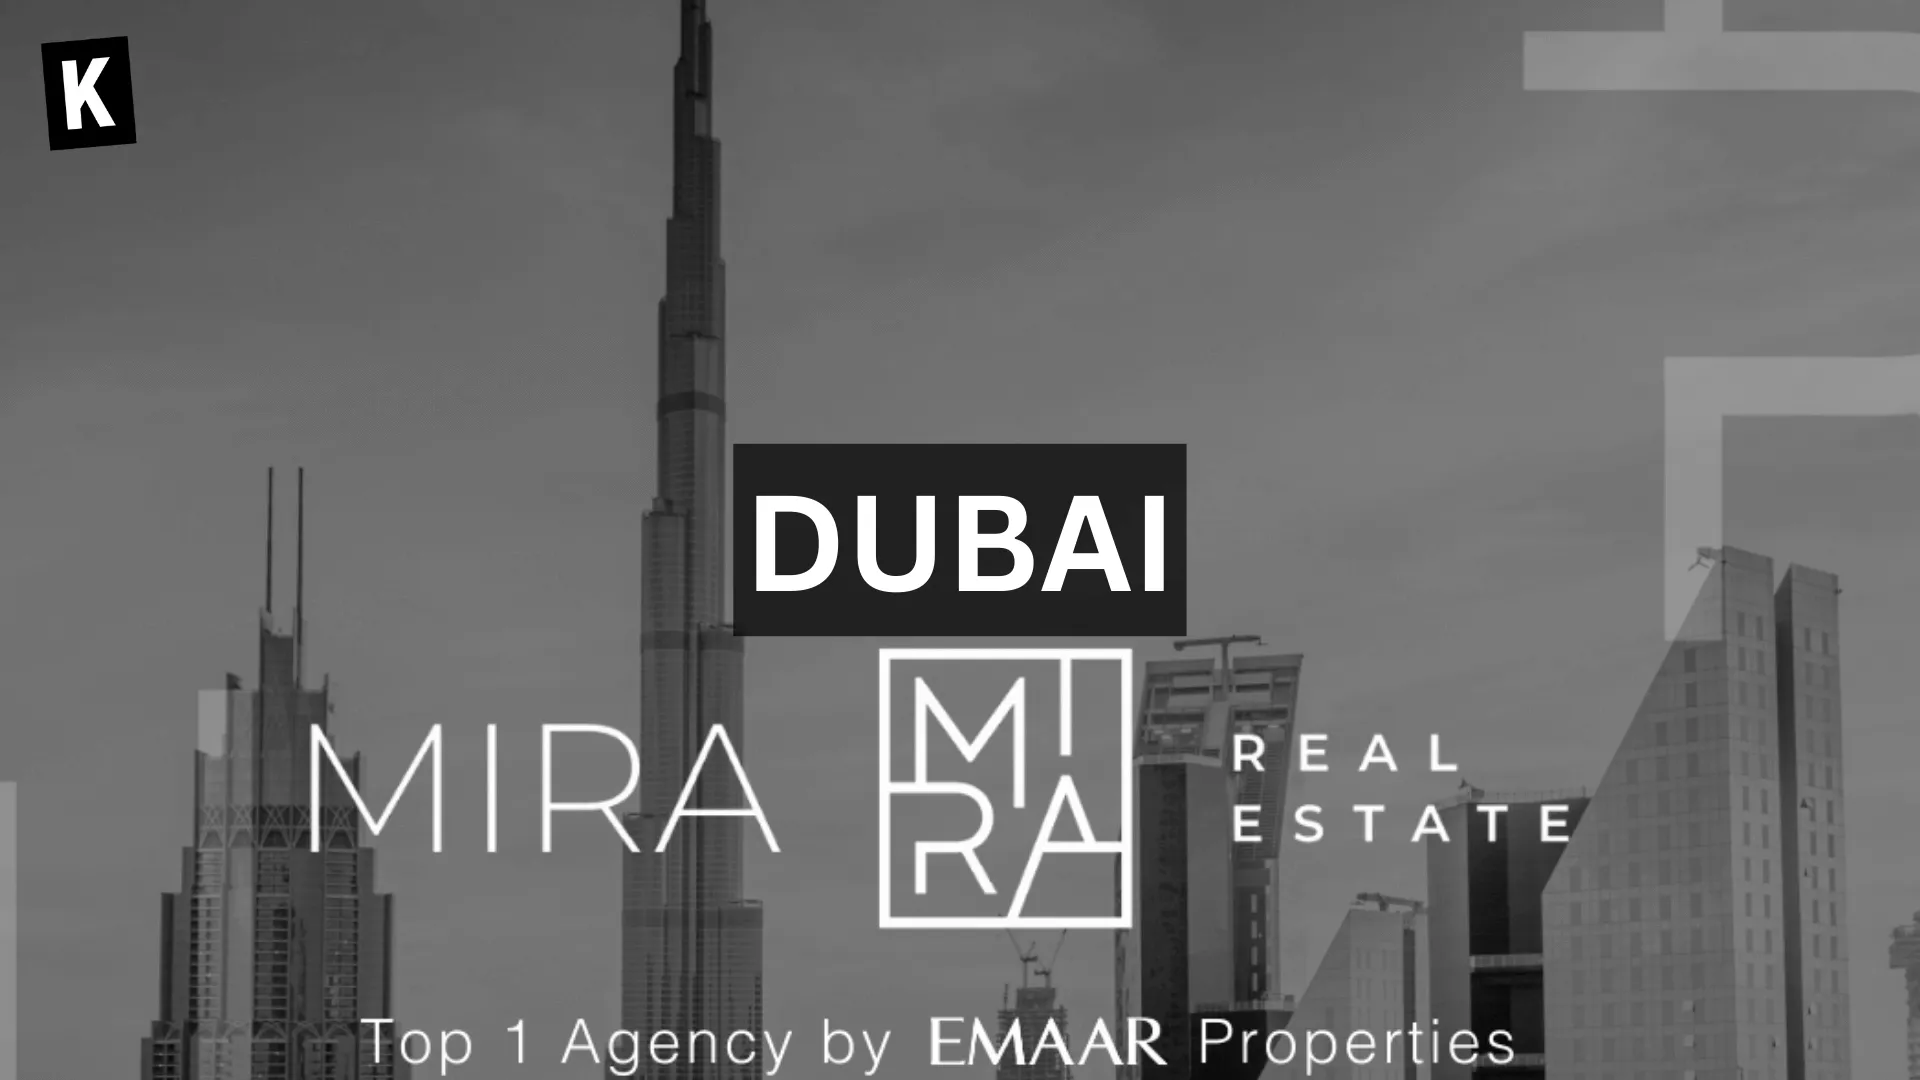 Mira Real Estate logos with Dubai skyline